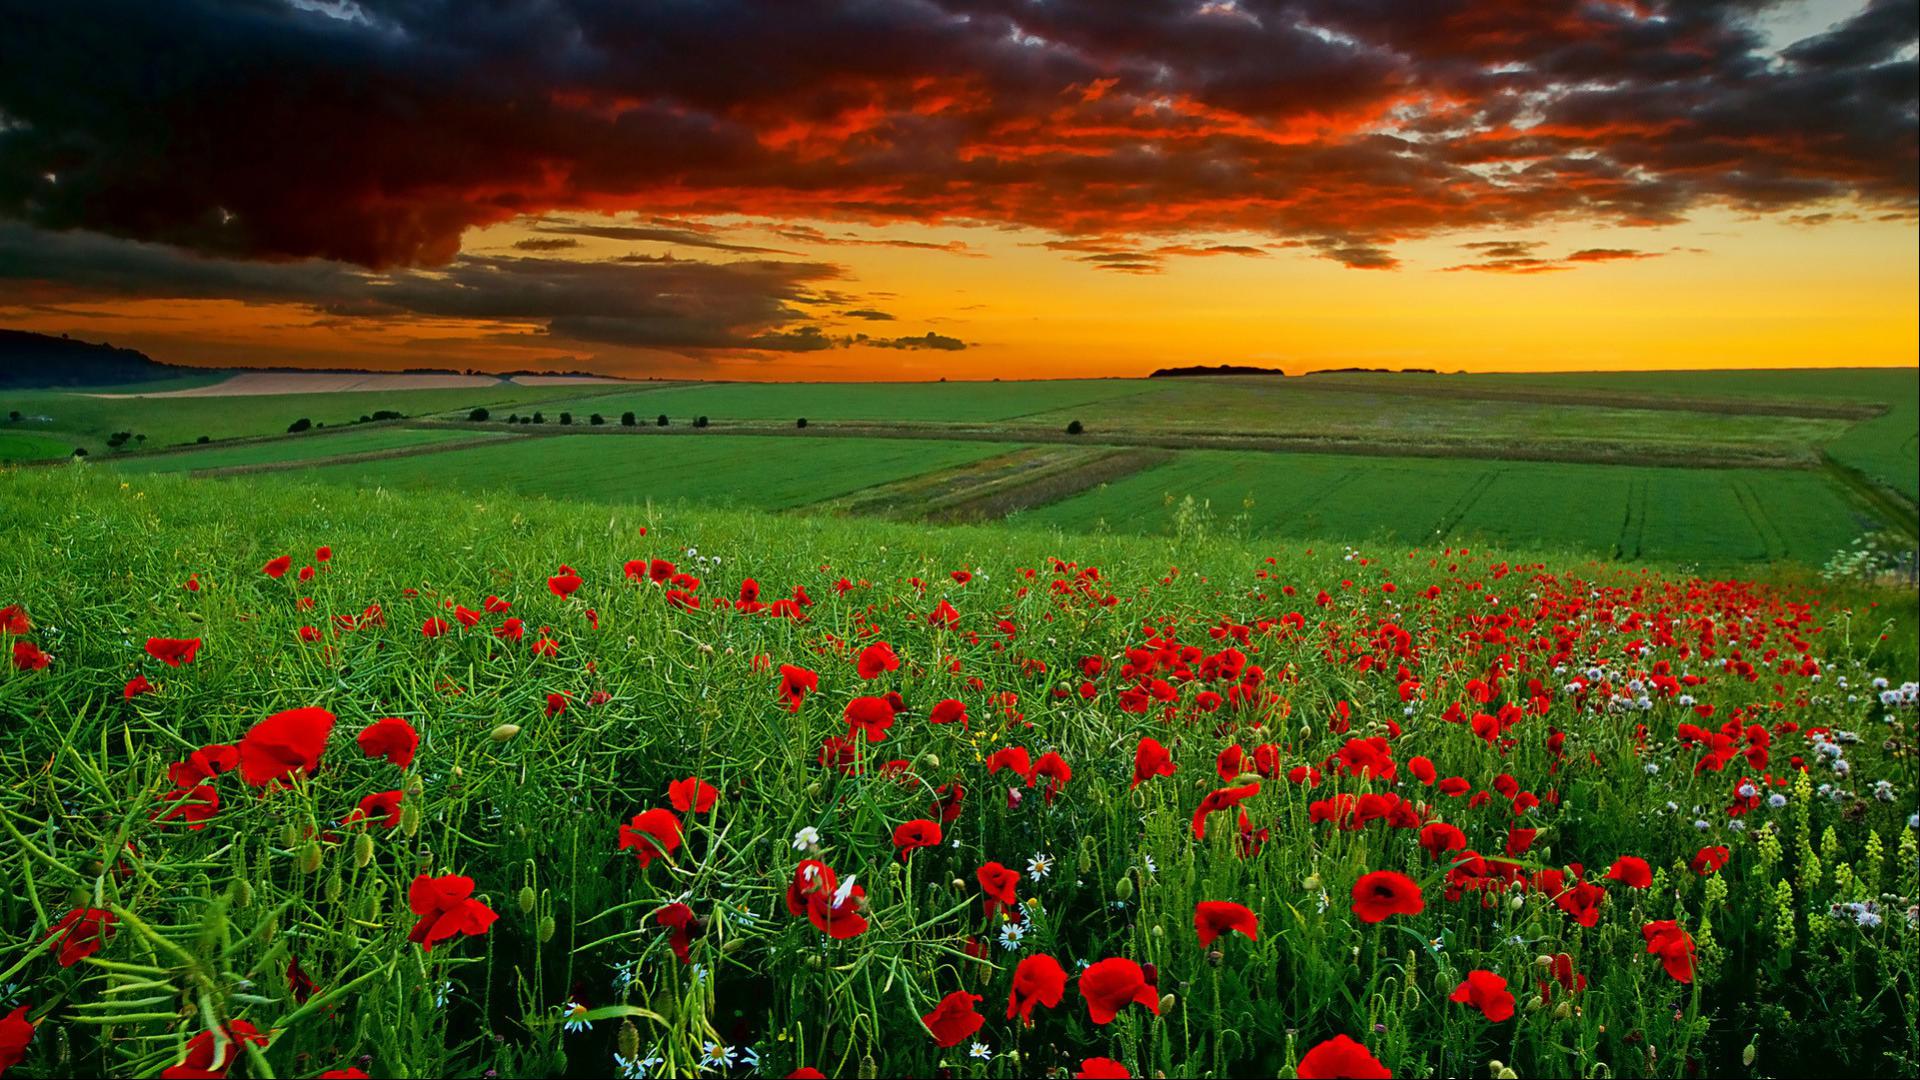 HD Nature Wallpaper 1080p Desktop In Green Landscape With Flowers